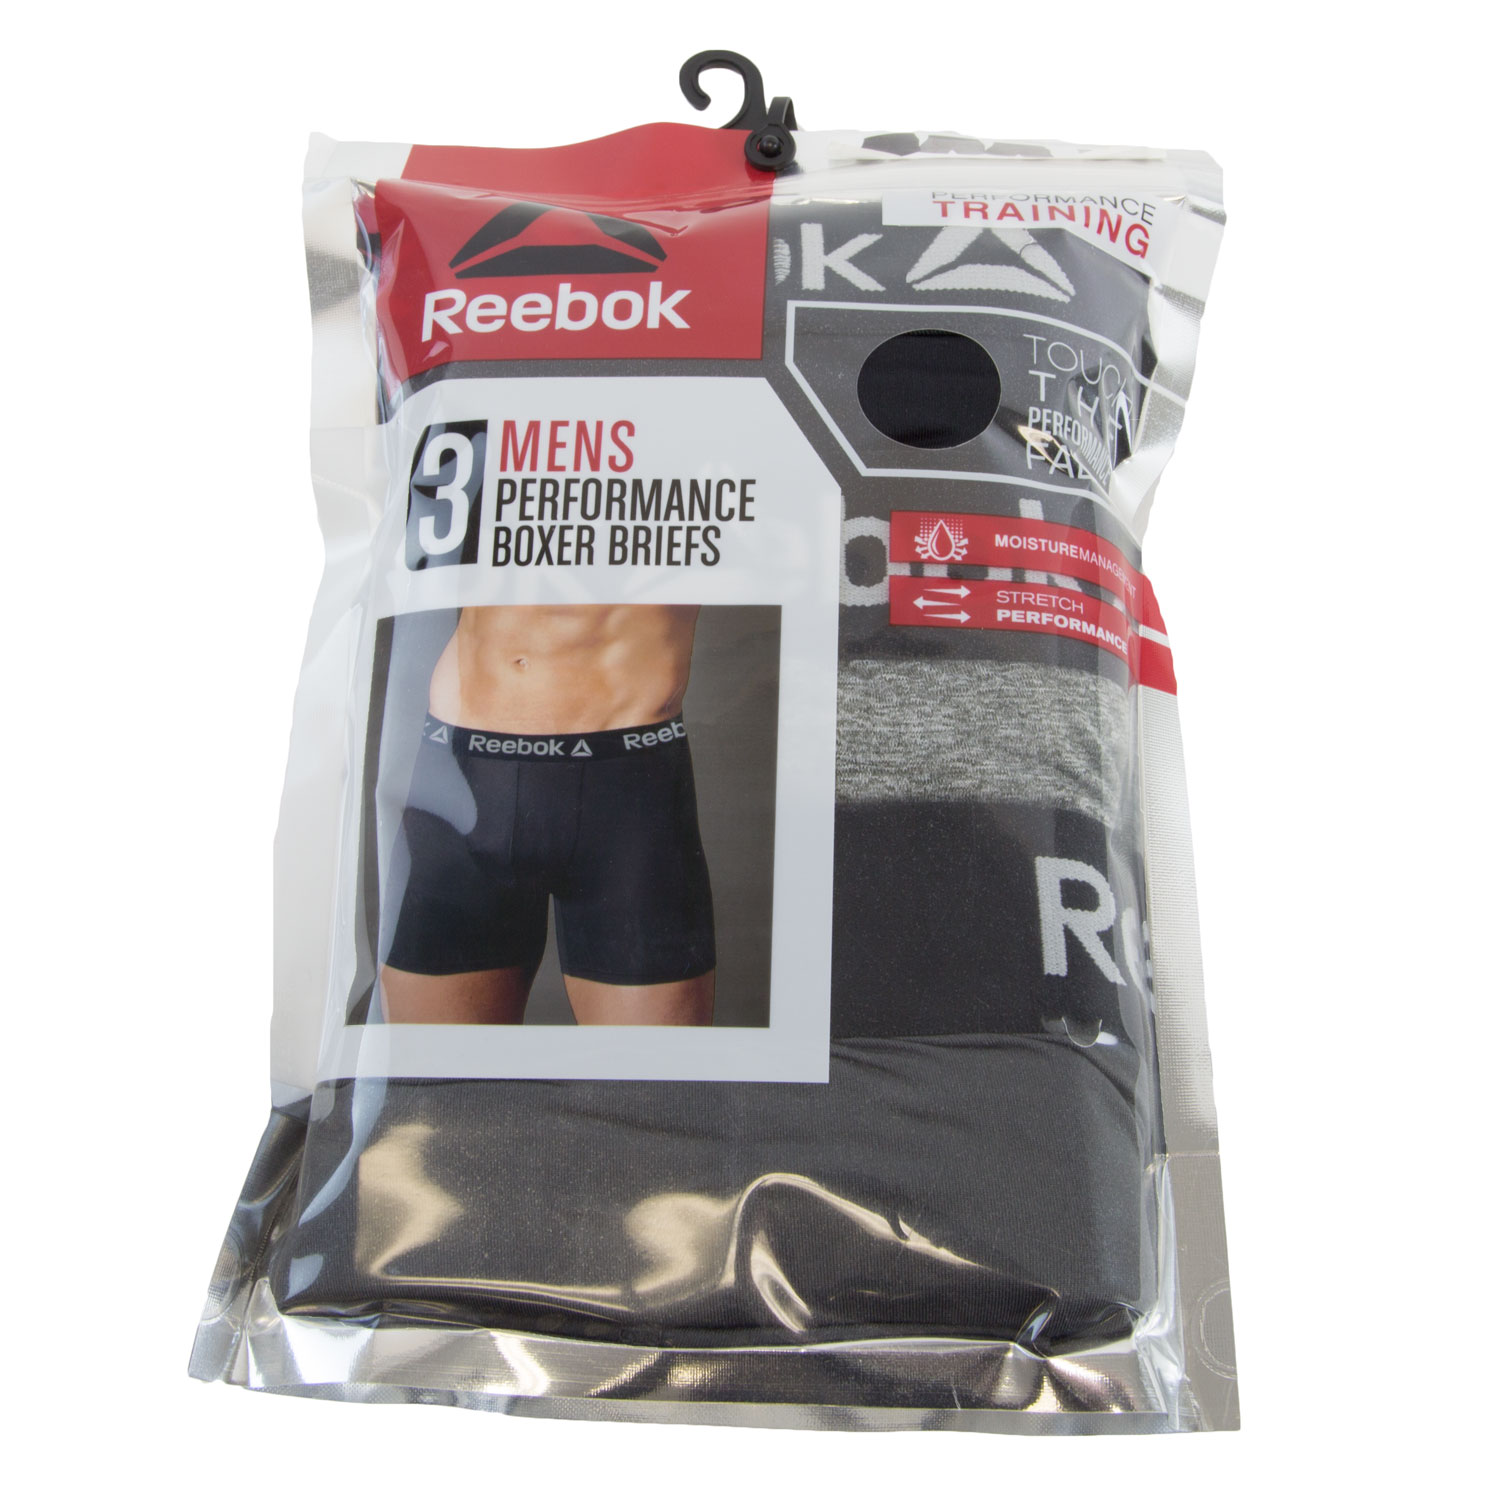 REEBOK Men's Heather Grey/Black 3 Pack Performance Boxer Briefs X-Large NEW